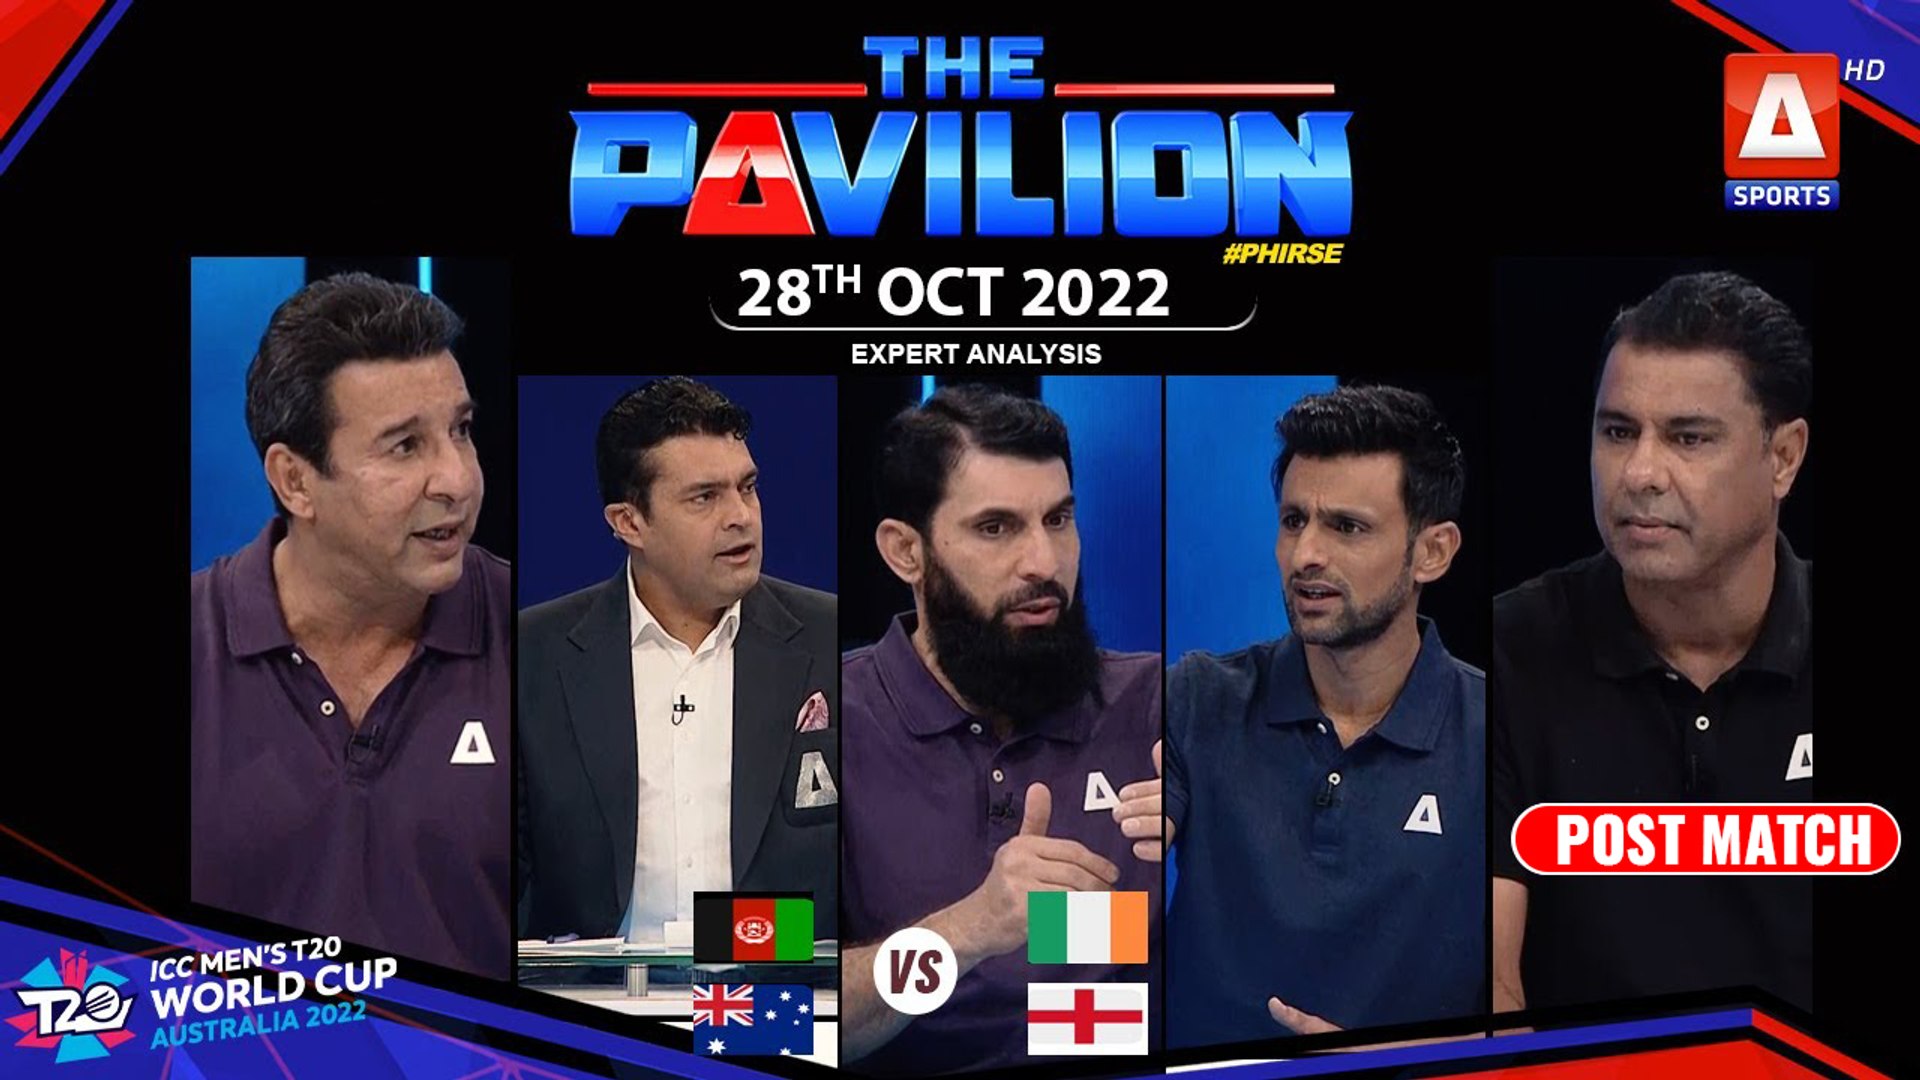 The Pavilion Australia vs England Post-Match Analysis 28th Oct 2022 A Sports